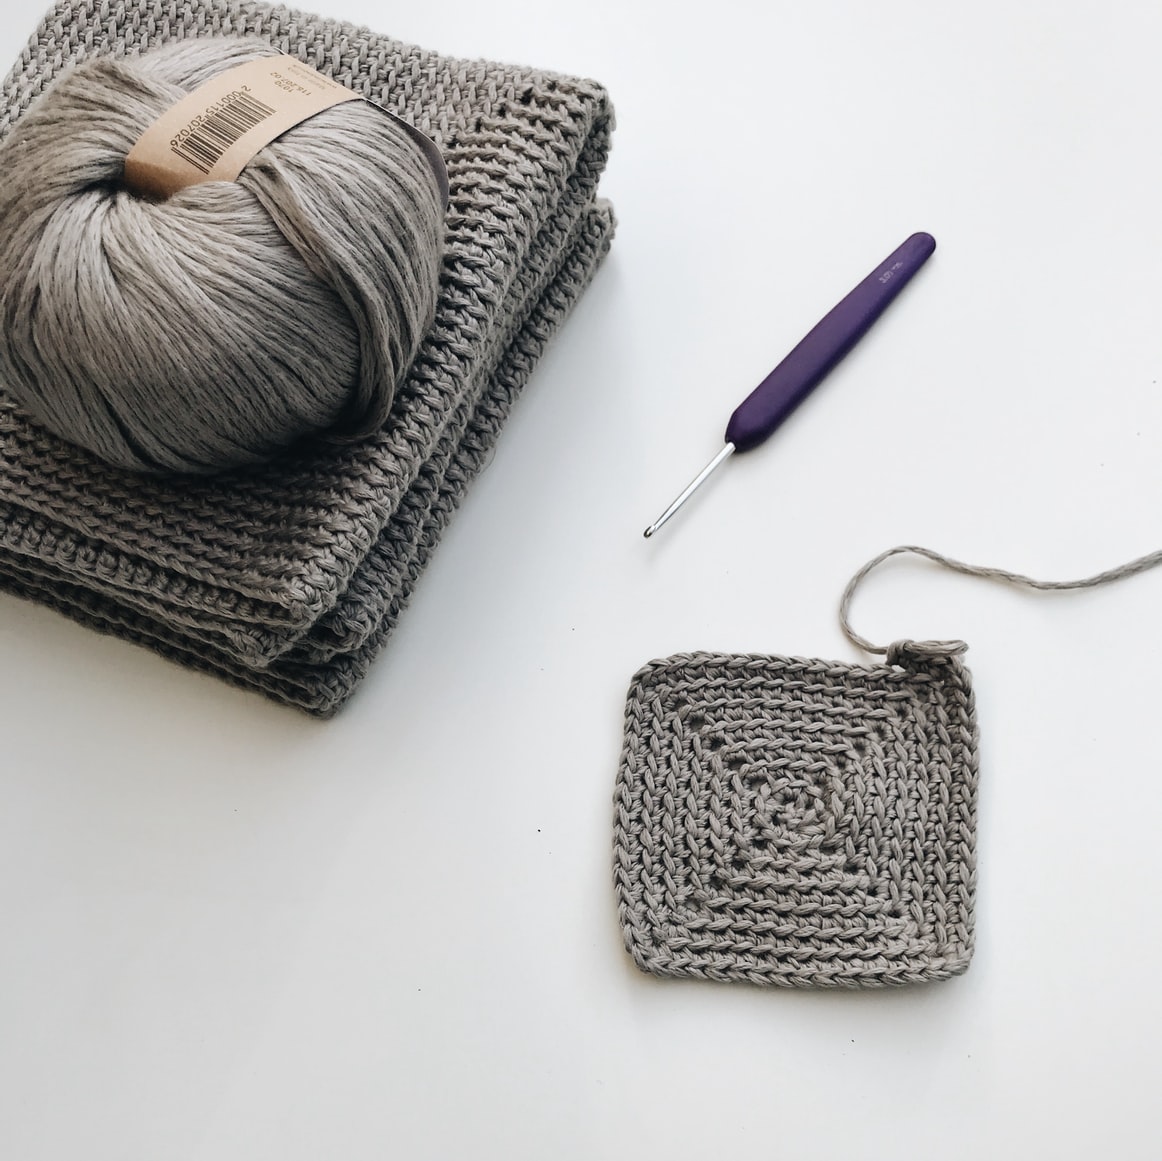 Best Crochet Hooks: Types and Ergonomic Sets